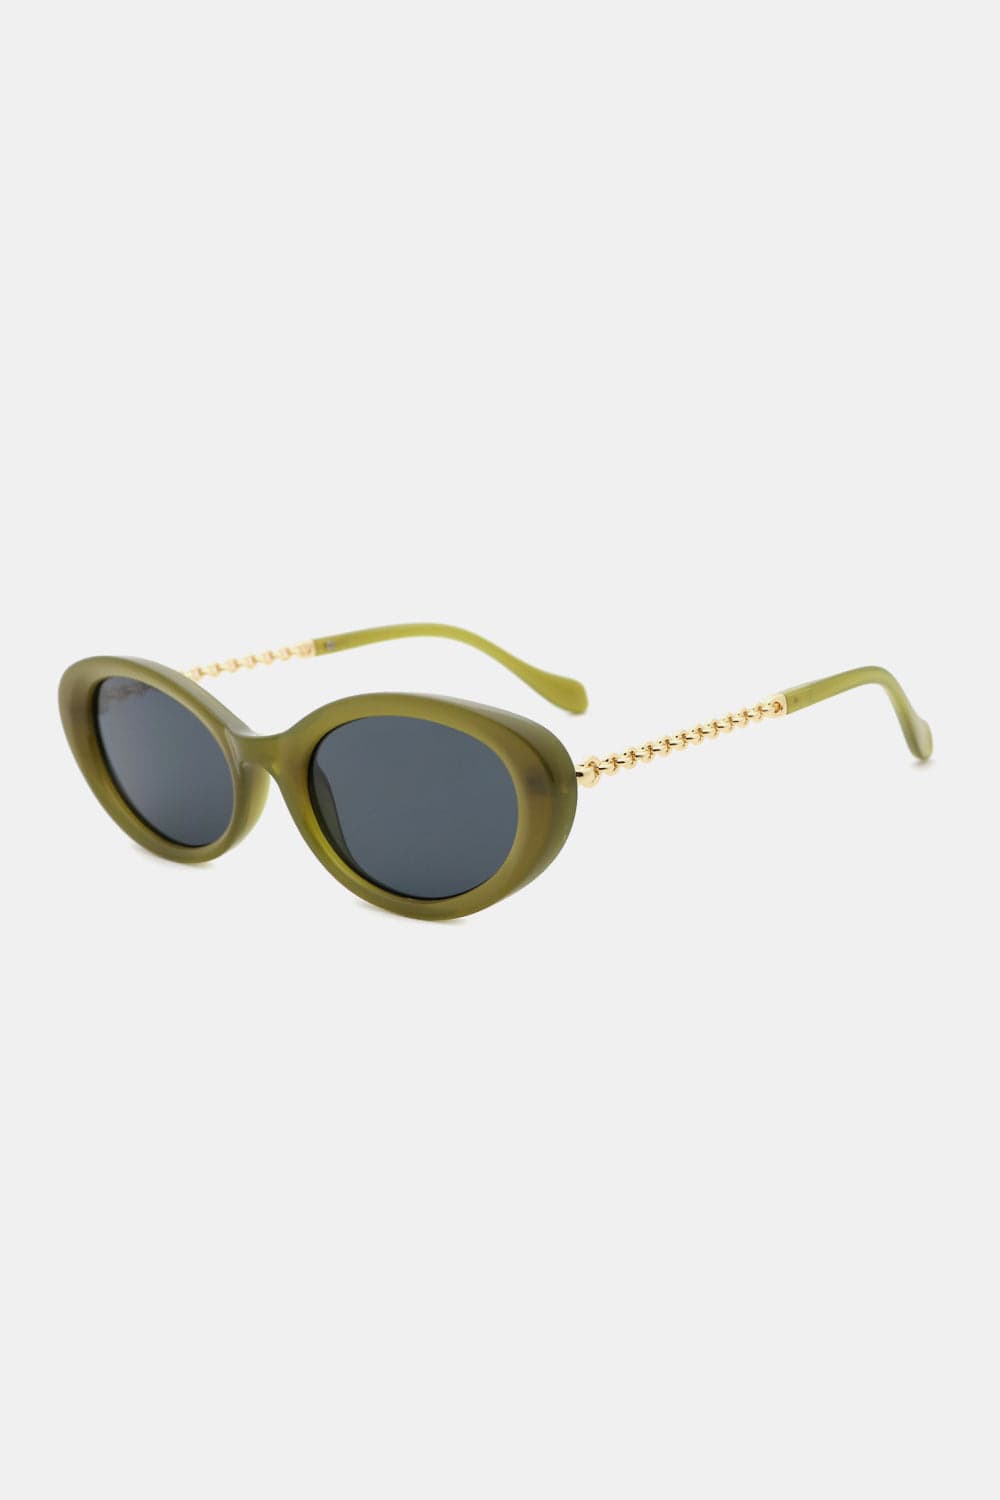 The802Gypsy sunglasses Moss / One Size GYPSY-Polycarbonate Frame Cat-Eye Sunglasses